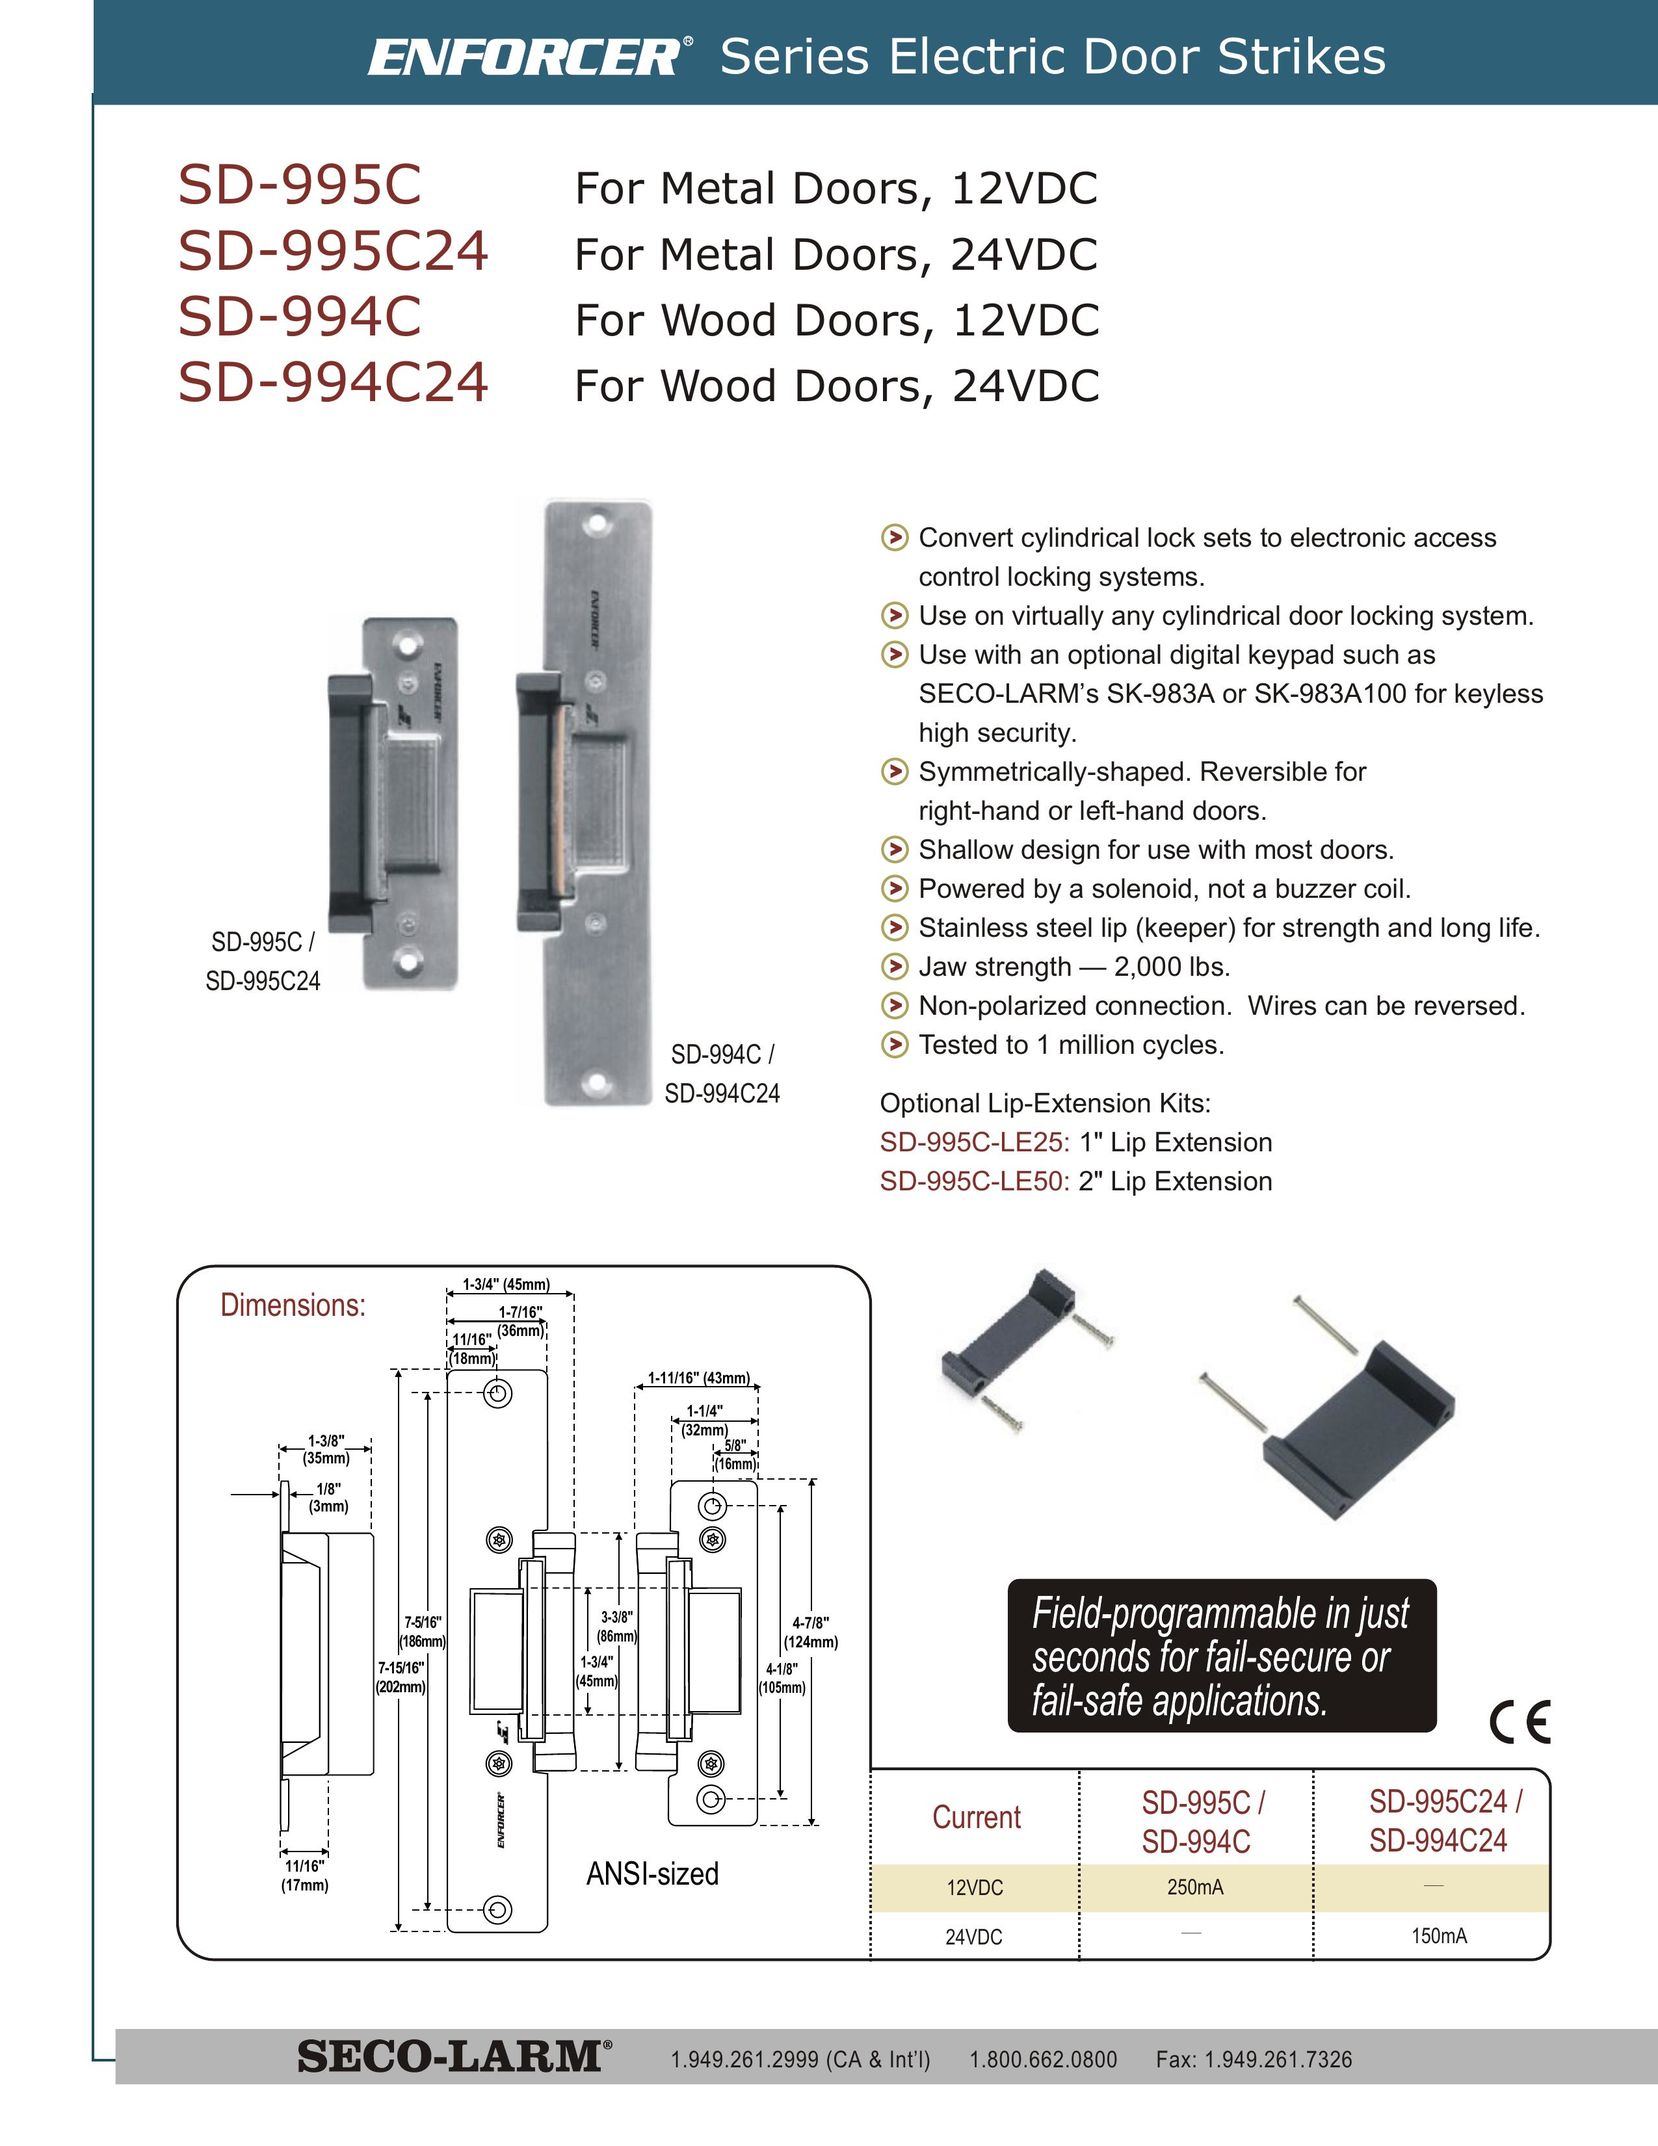 SECO-LARM USA SD-994C24 Door User Manual